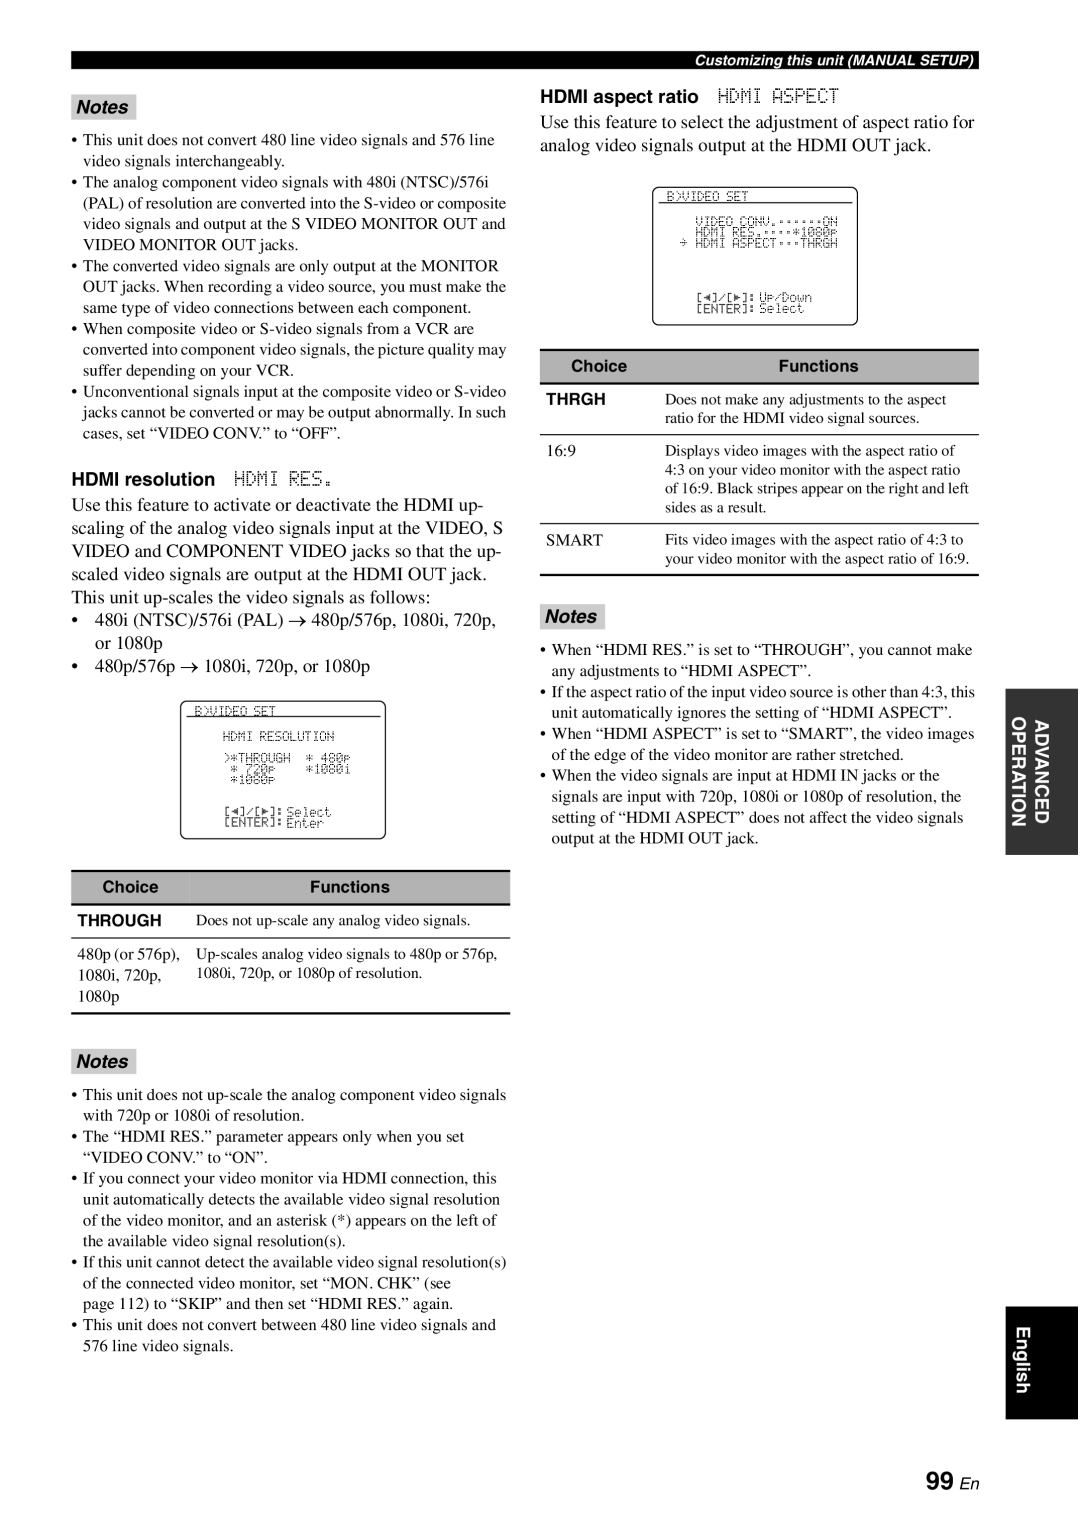 Yamaha HTR-6180 owner manual 99 En, Notes, HDMI resolution HDMI RES, HDMI aspect ratio HDMI ASPECT 